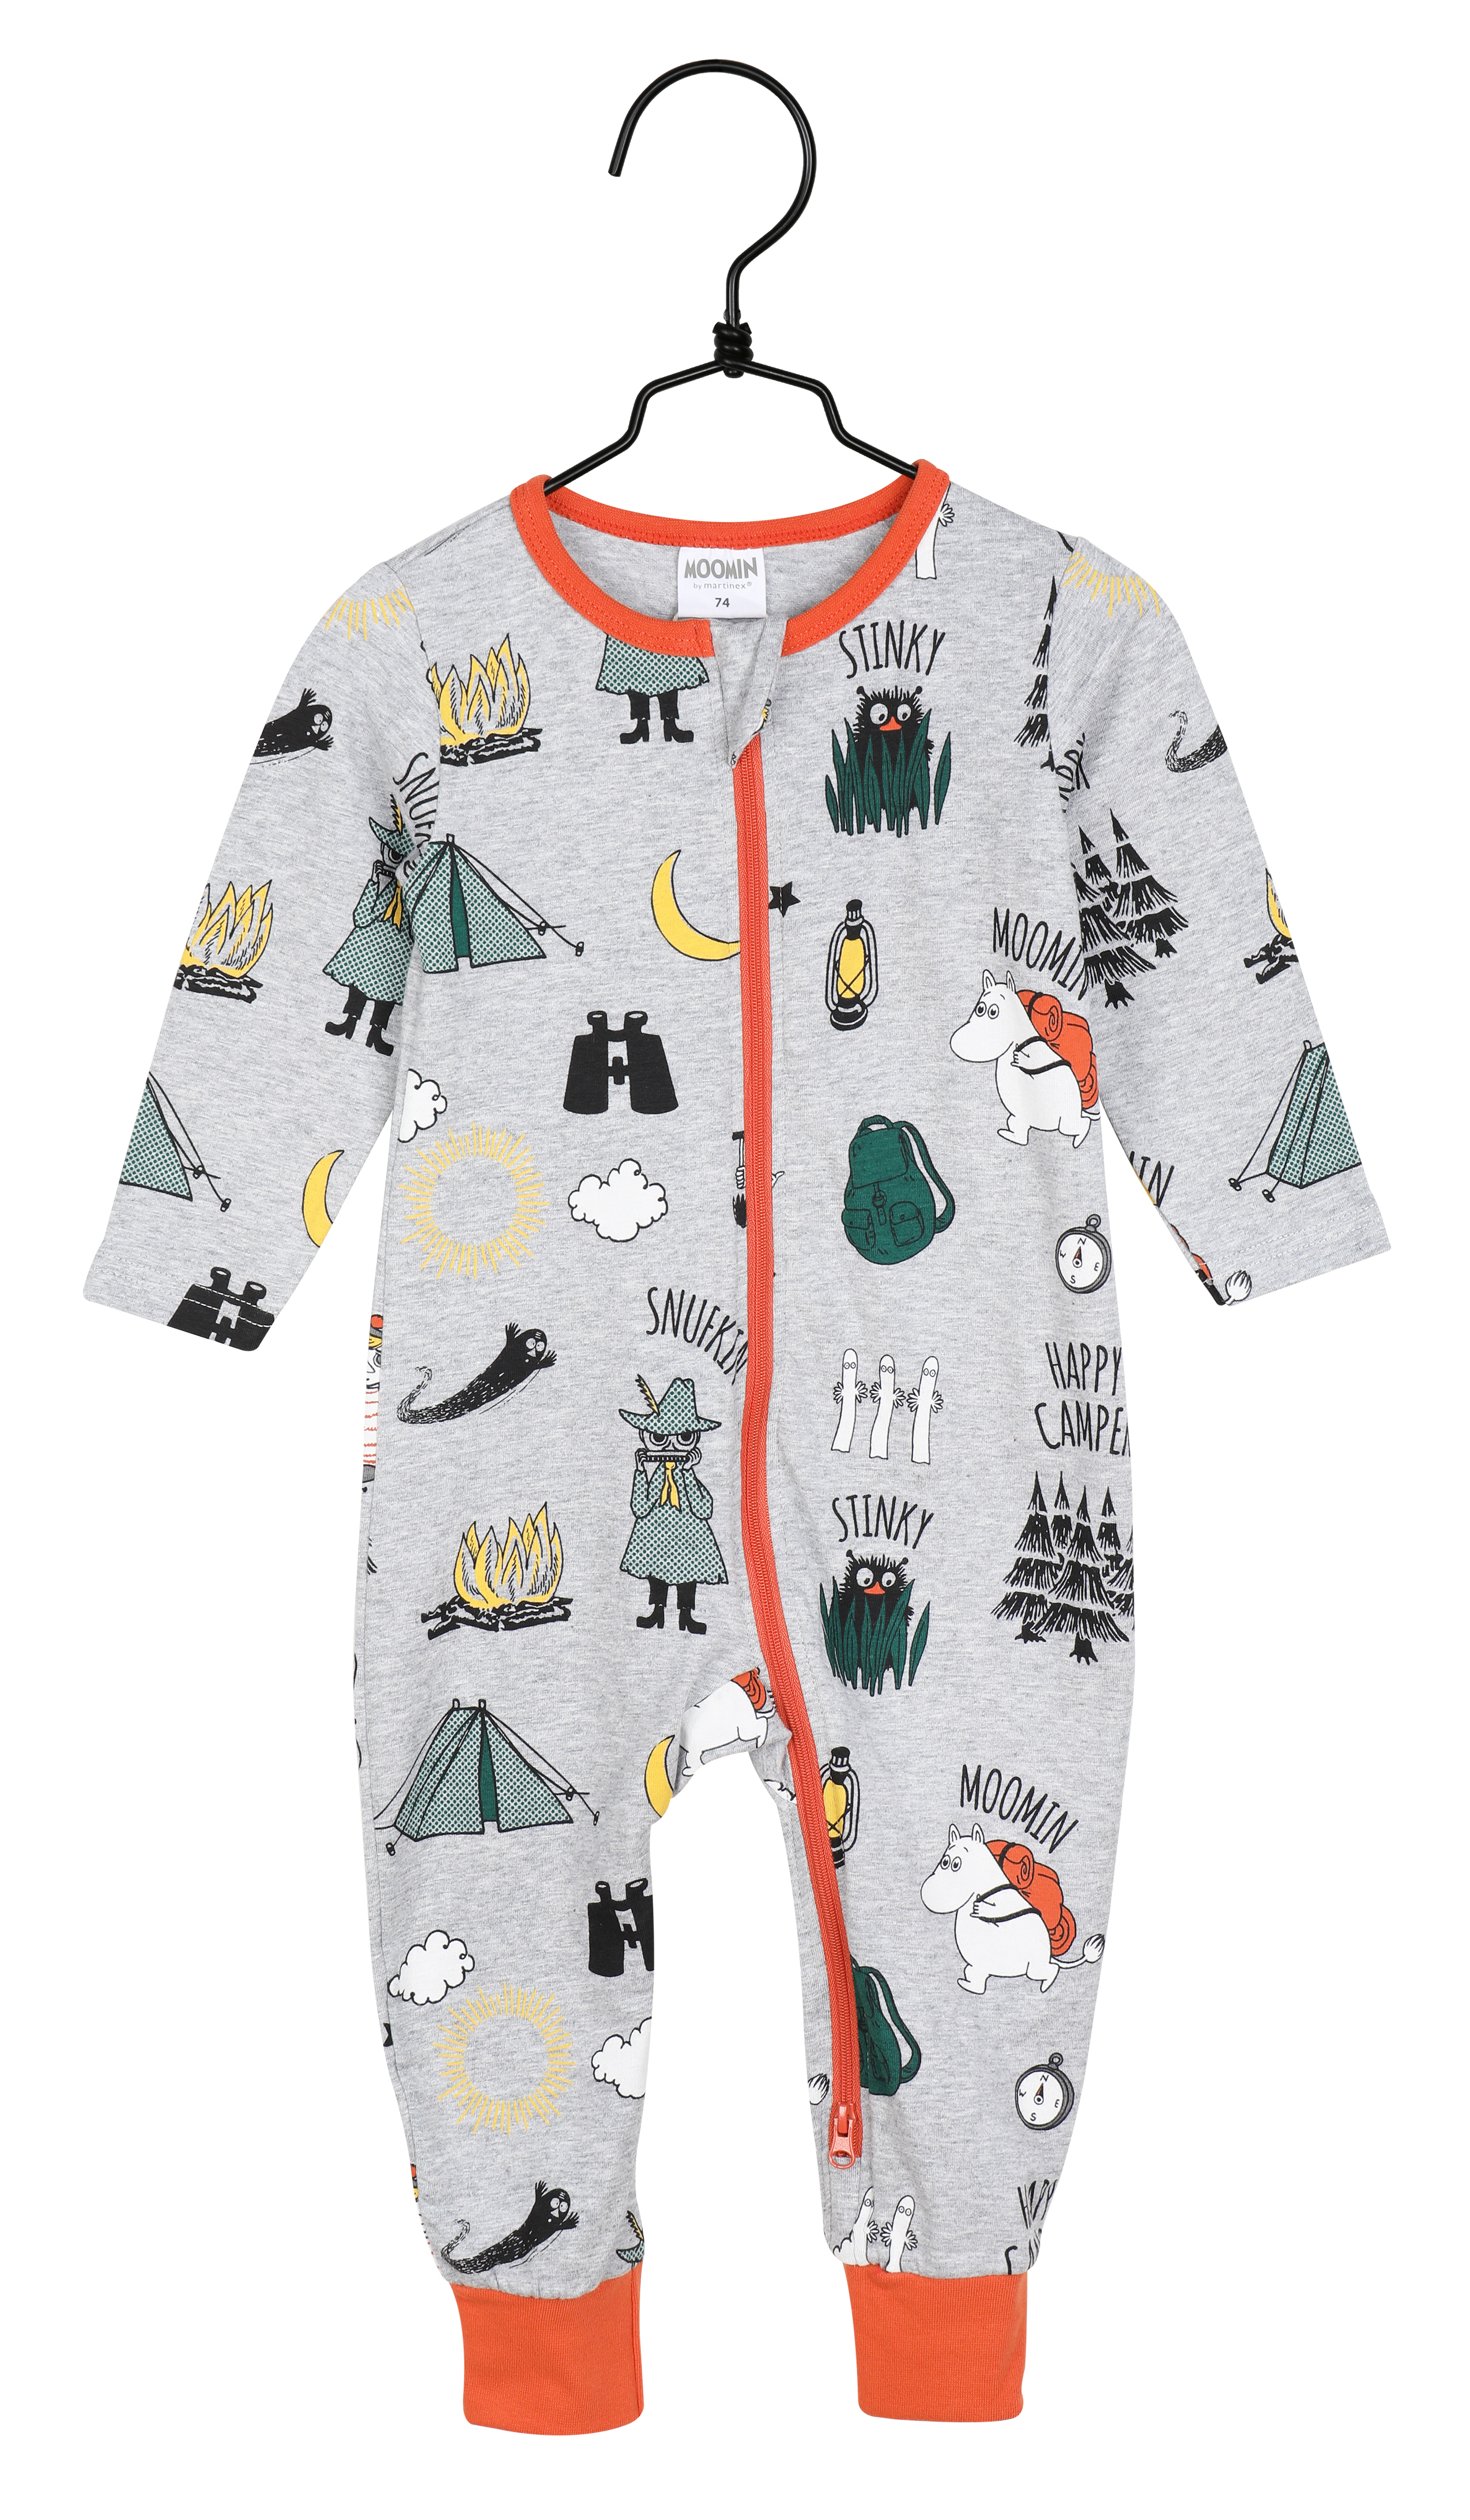 Martinex Moomin Pyjamas Camping Trip Heathered Grey